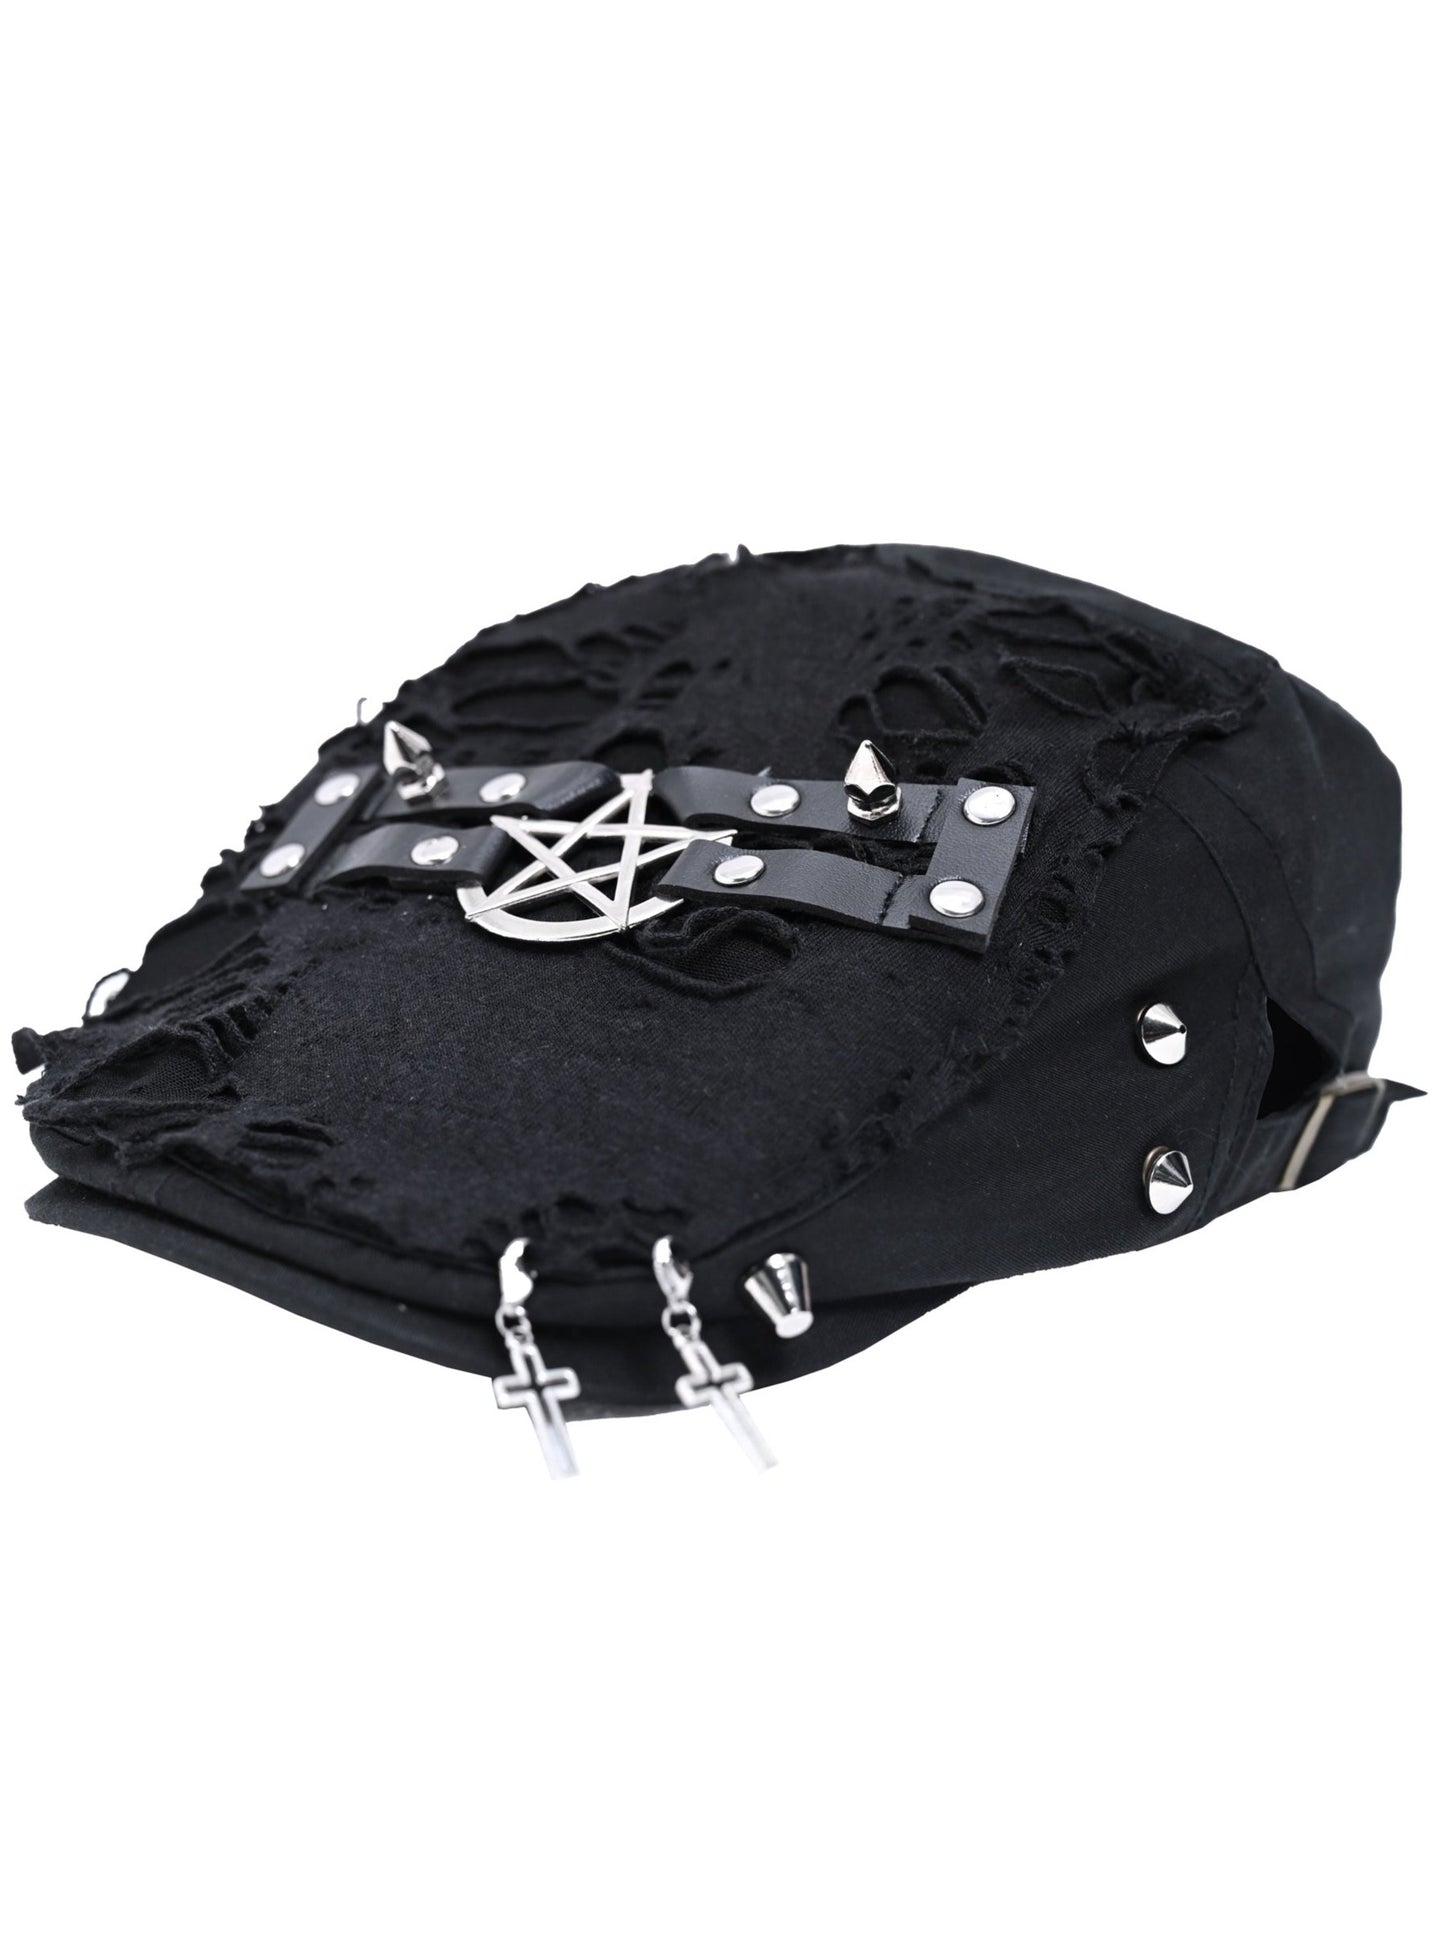 punk subculture dark beret